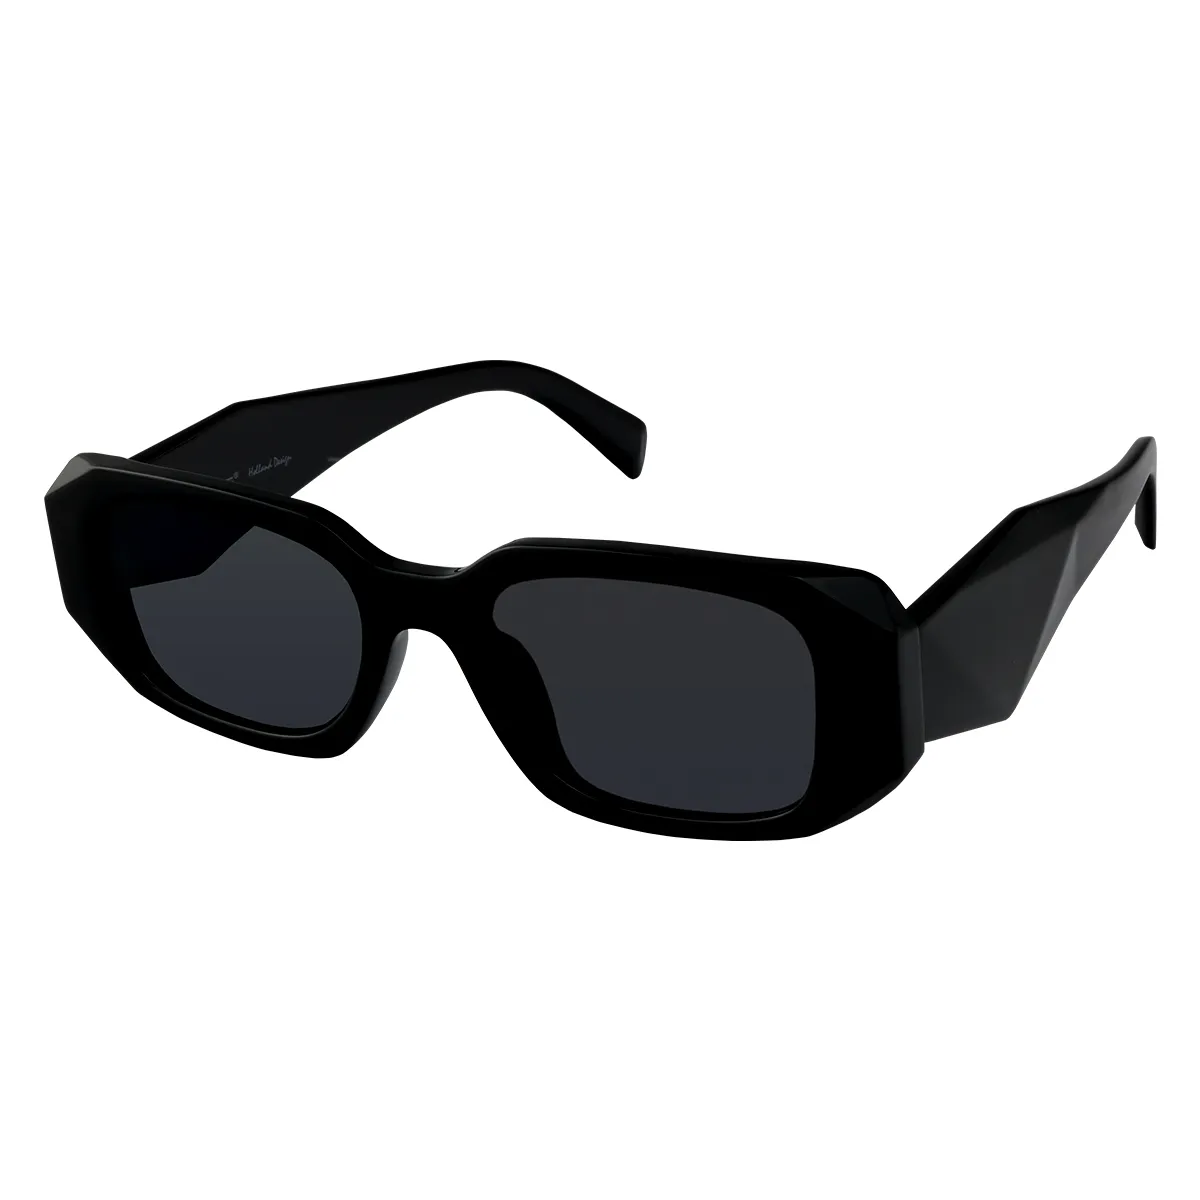 Arianwen -  Black Sunglasses for Women